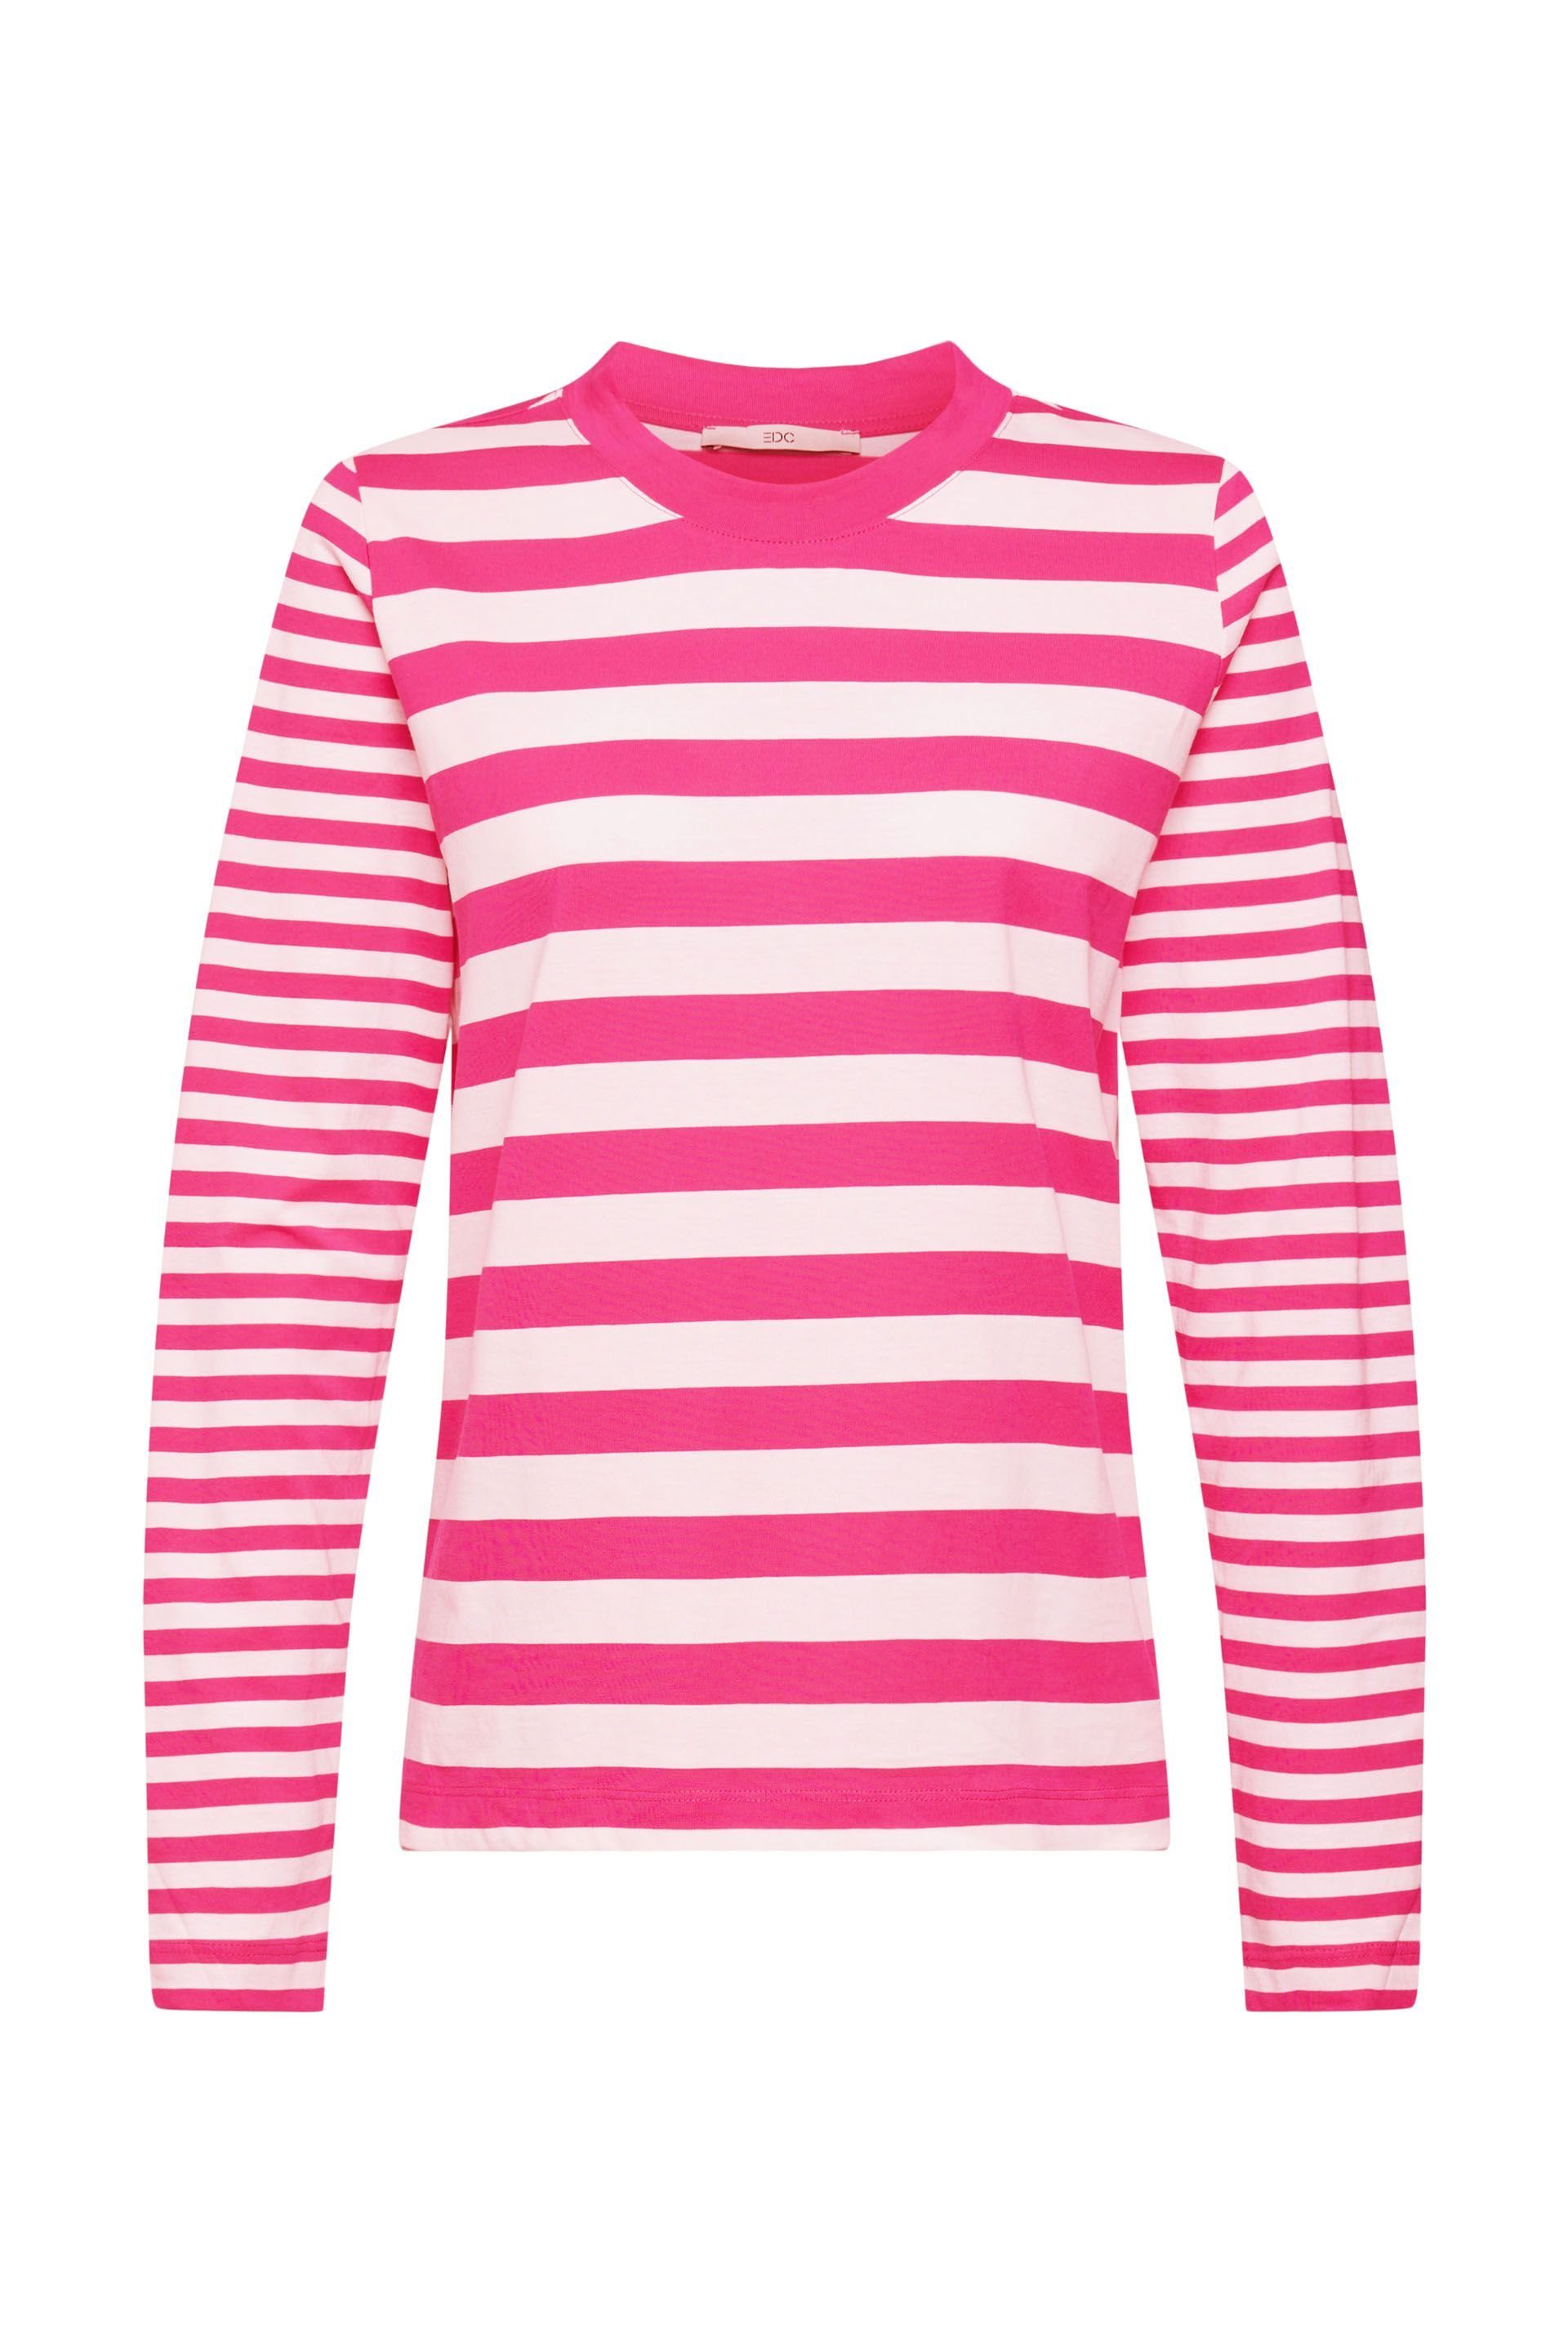 Esprit Longsleeve pink fuchsia | Shirts